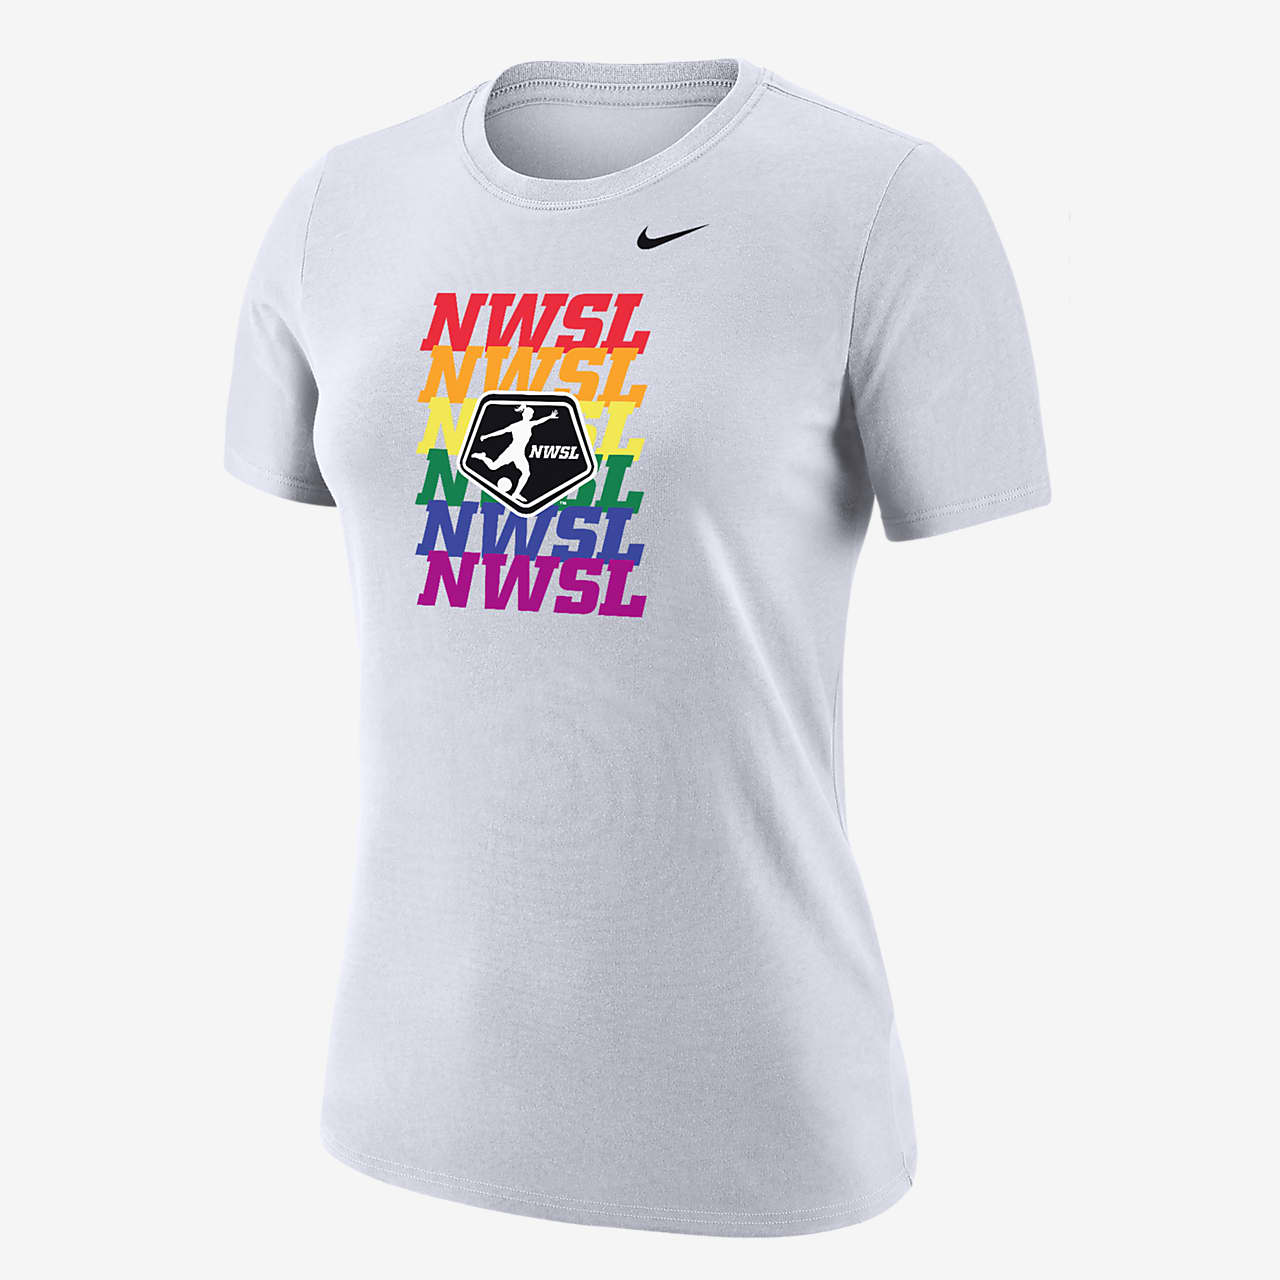 NWSL Women\'s Soccer T-Shirt. Nike